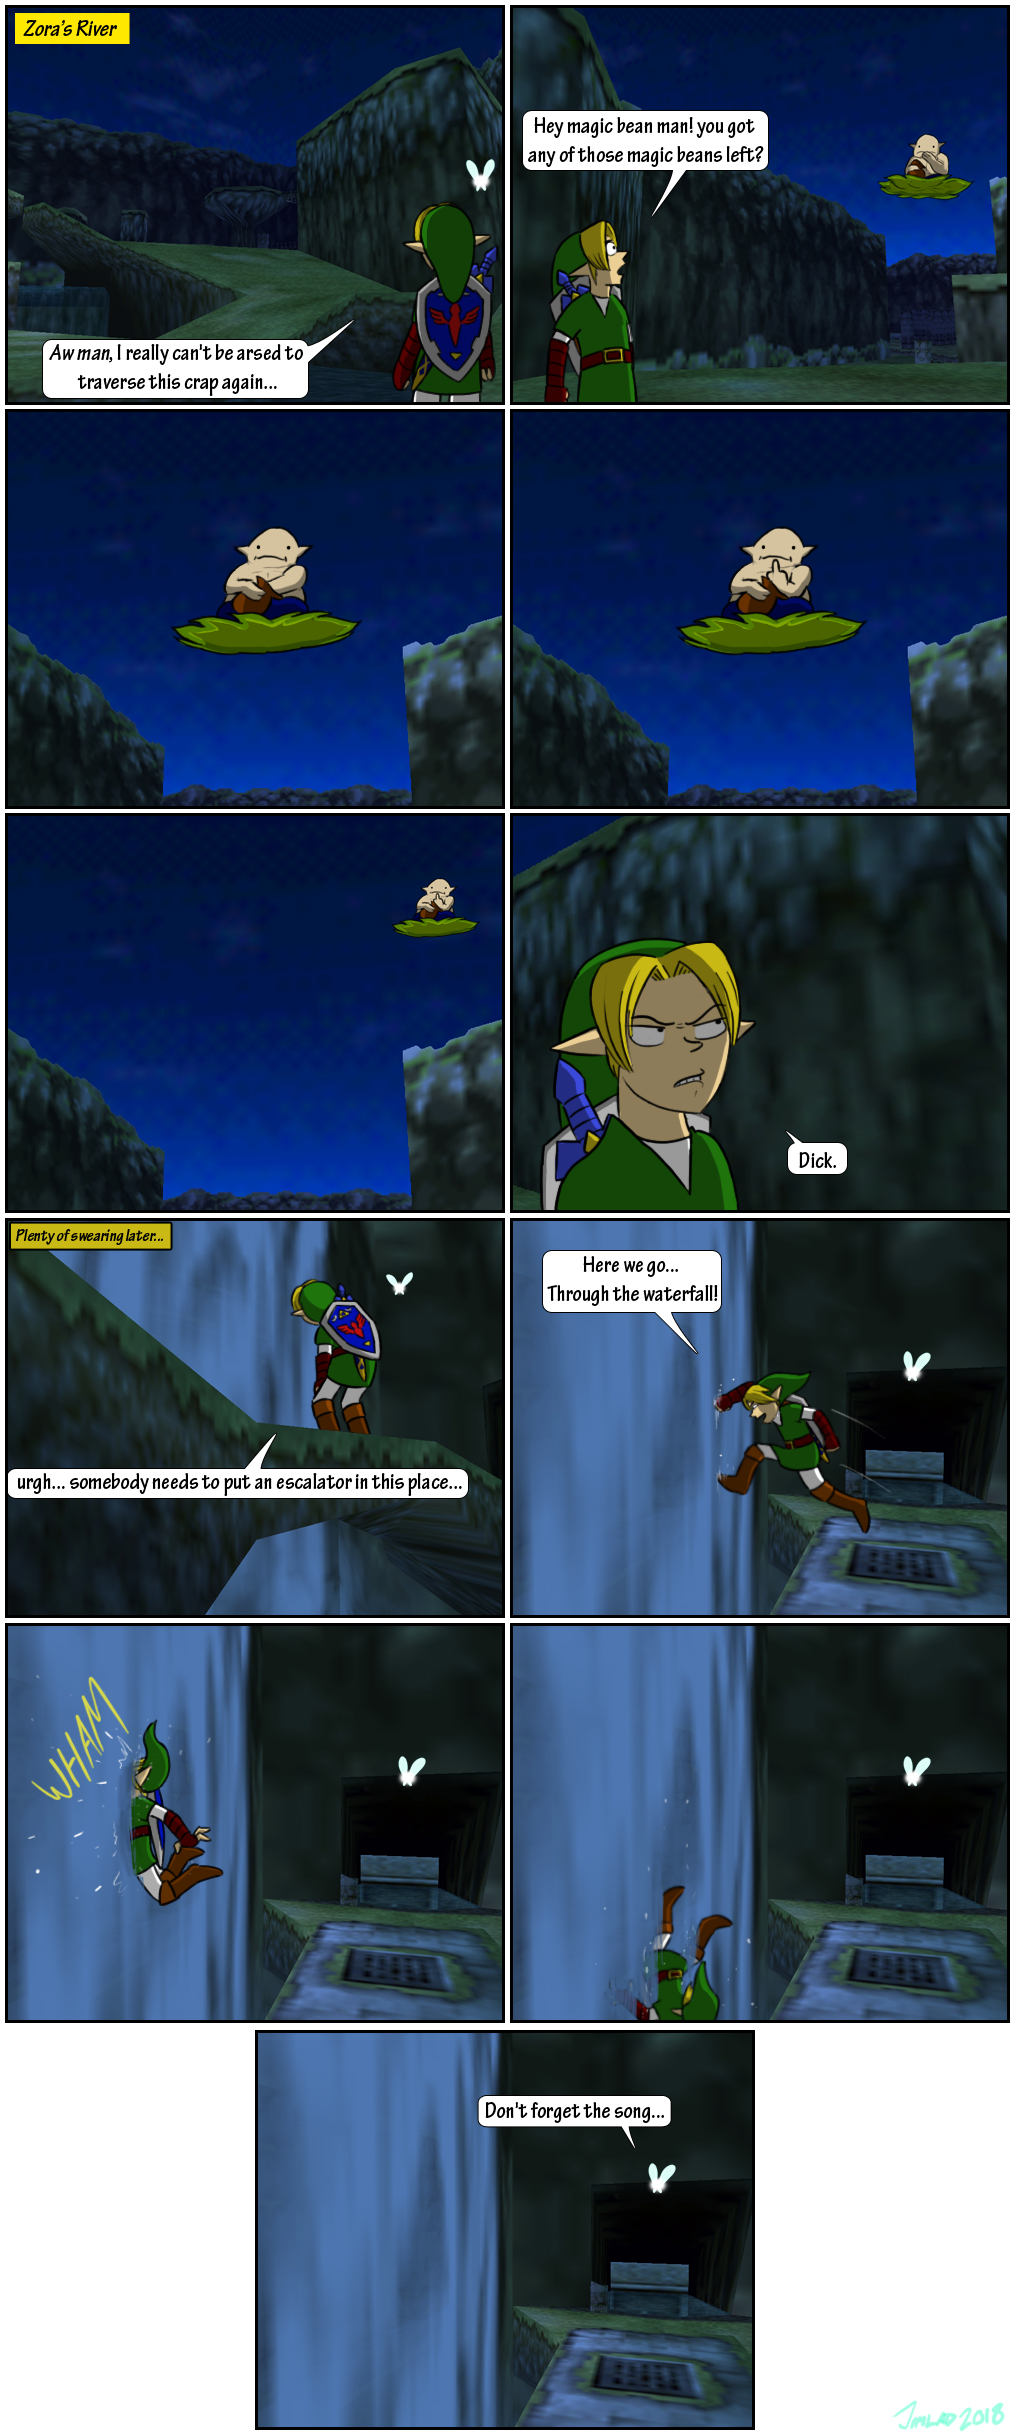 Te, legend of Zelda. - Ocarina of Time PT-BR.zipffile - iFunny Brazil